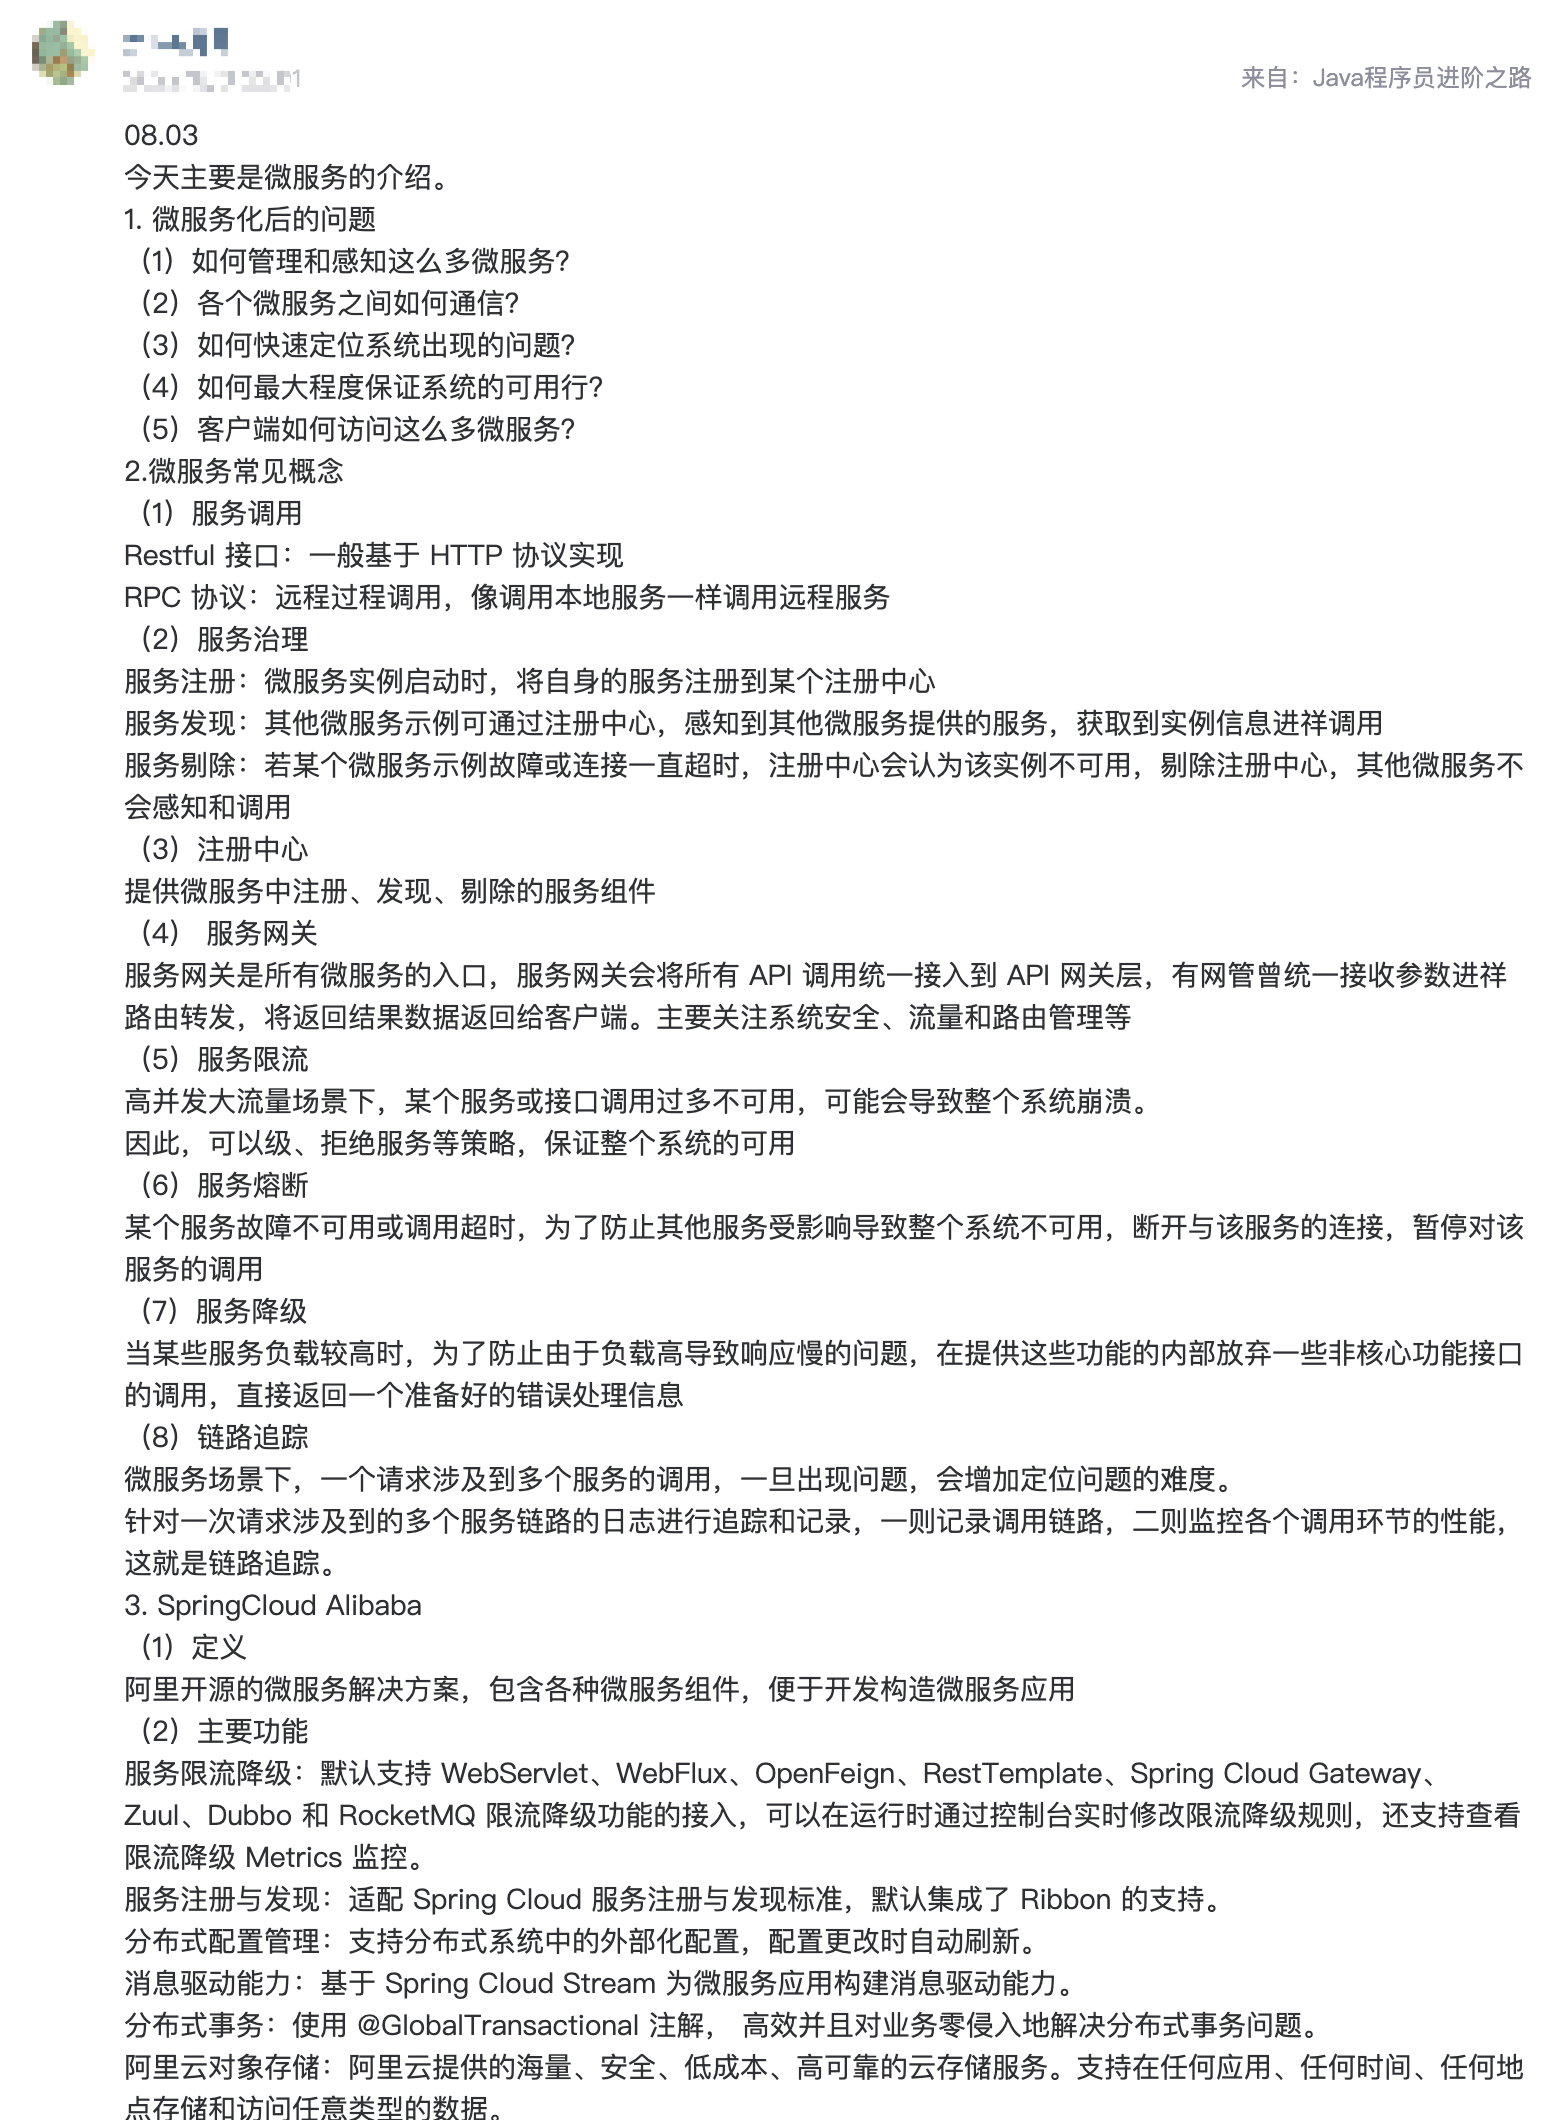 images/zhishixingqiu/readme-a31656db-1862-4d36-aee3-708bcce1c04e.png